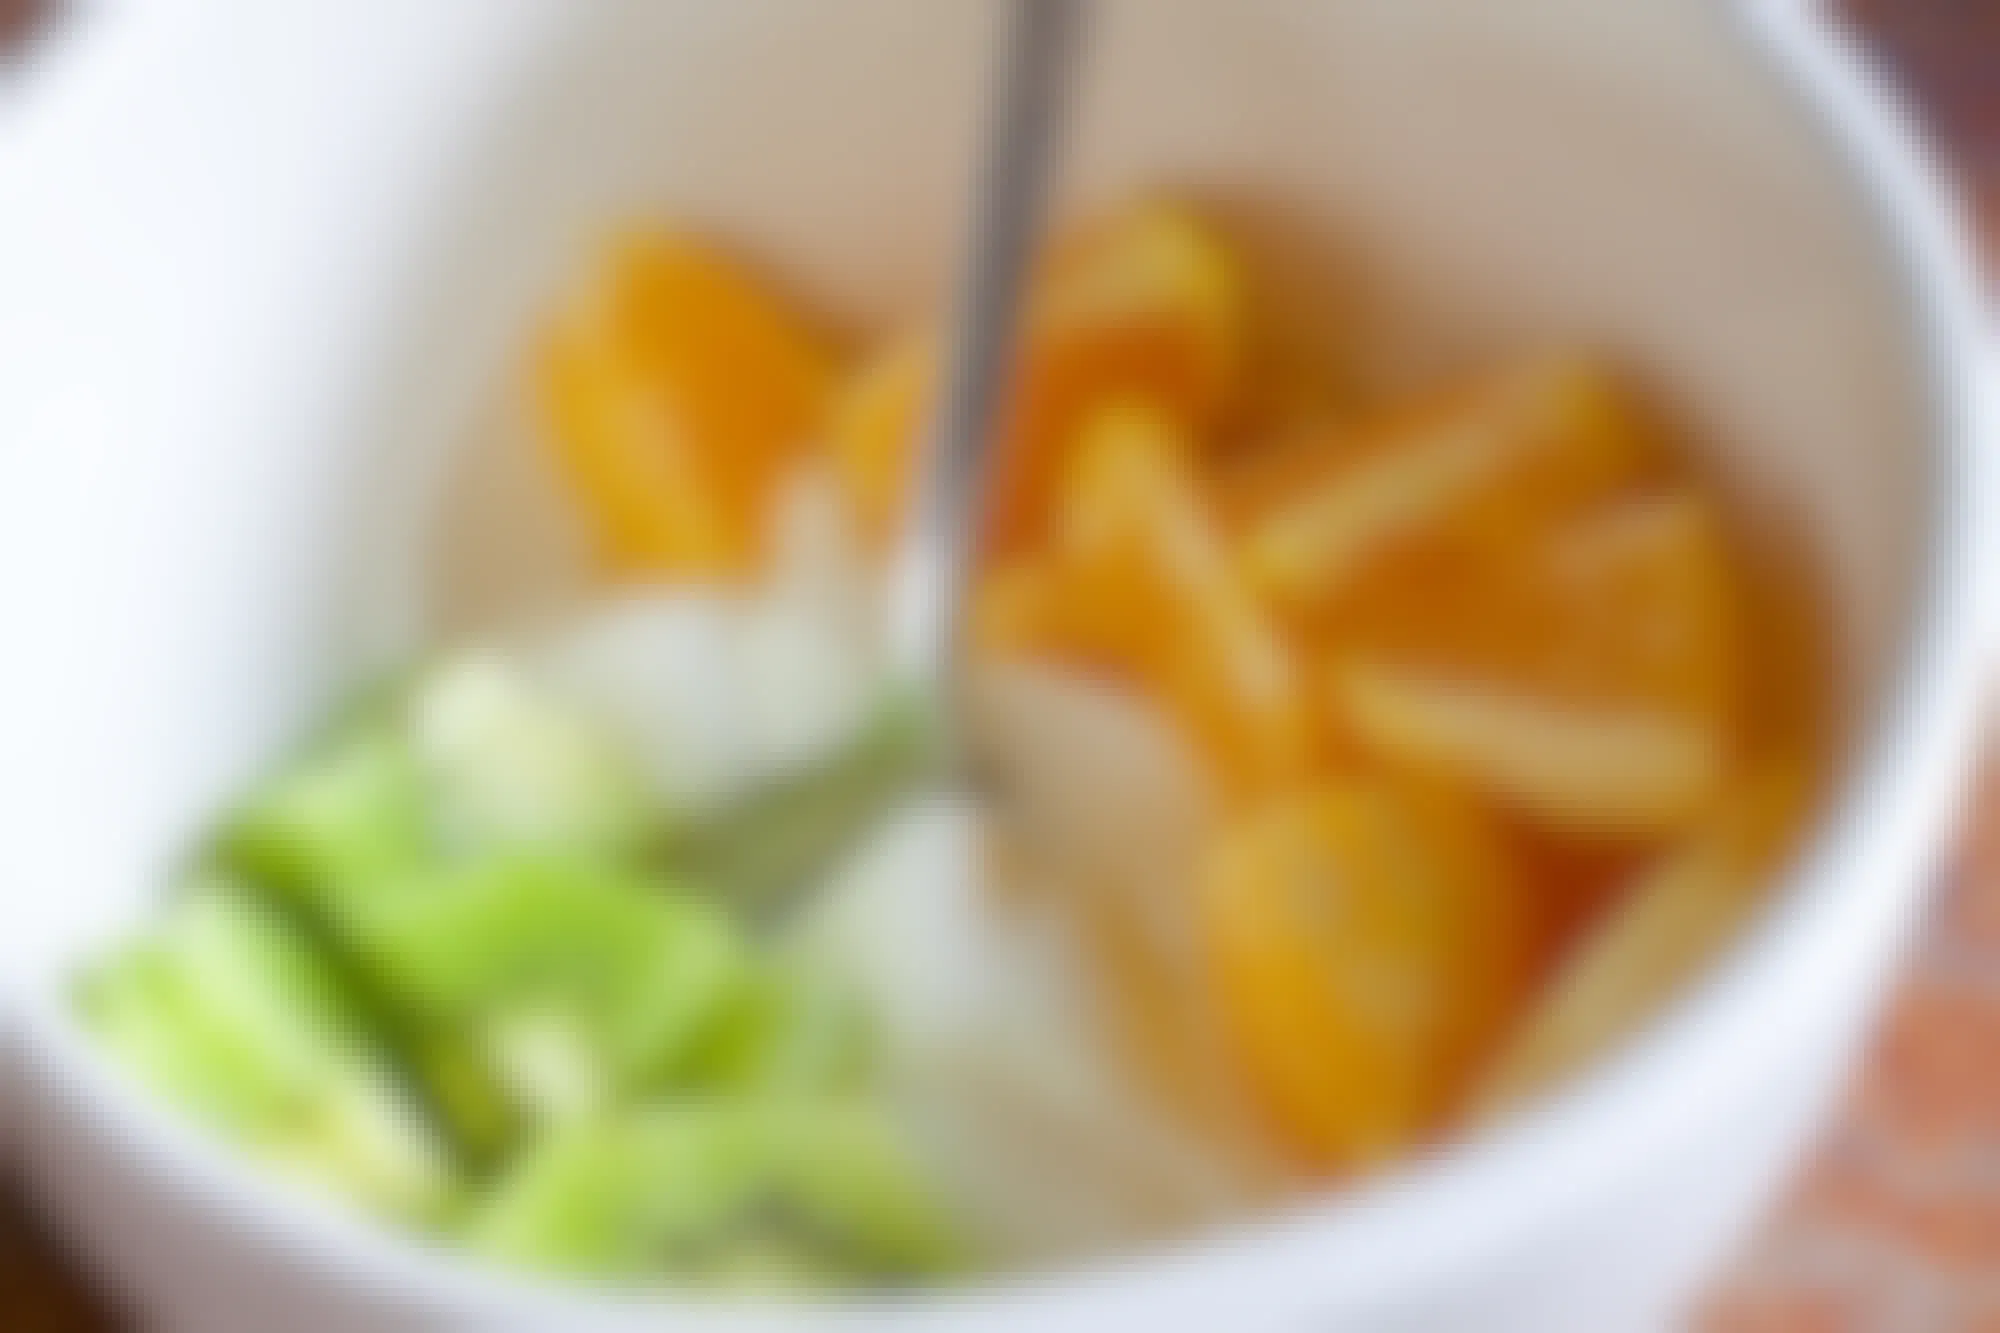 A close up on a bowl with kiwi, yogurt, and mandarin oranges arranged to look like the Irish flag